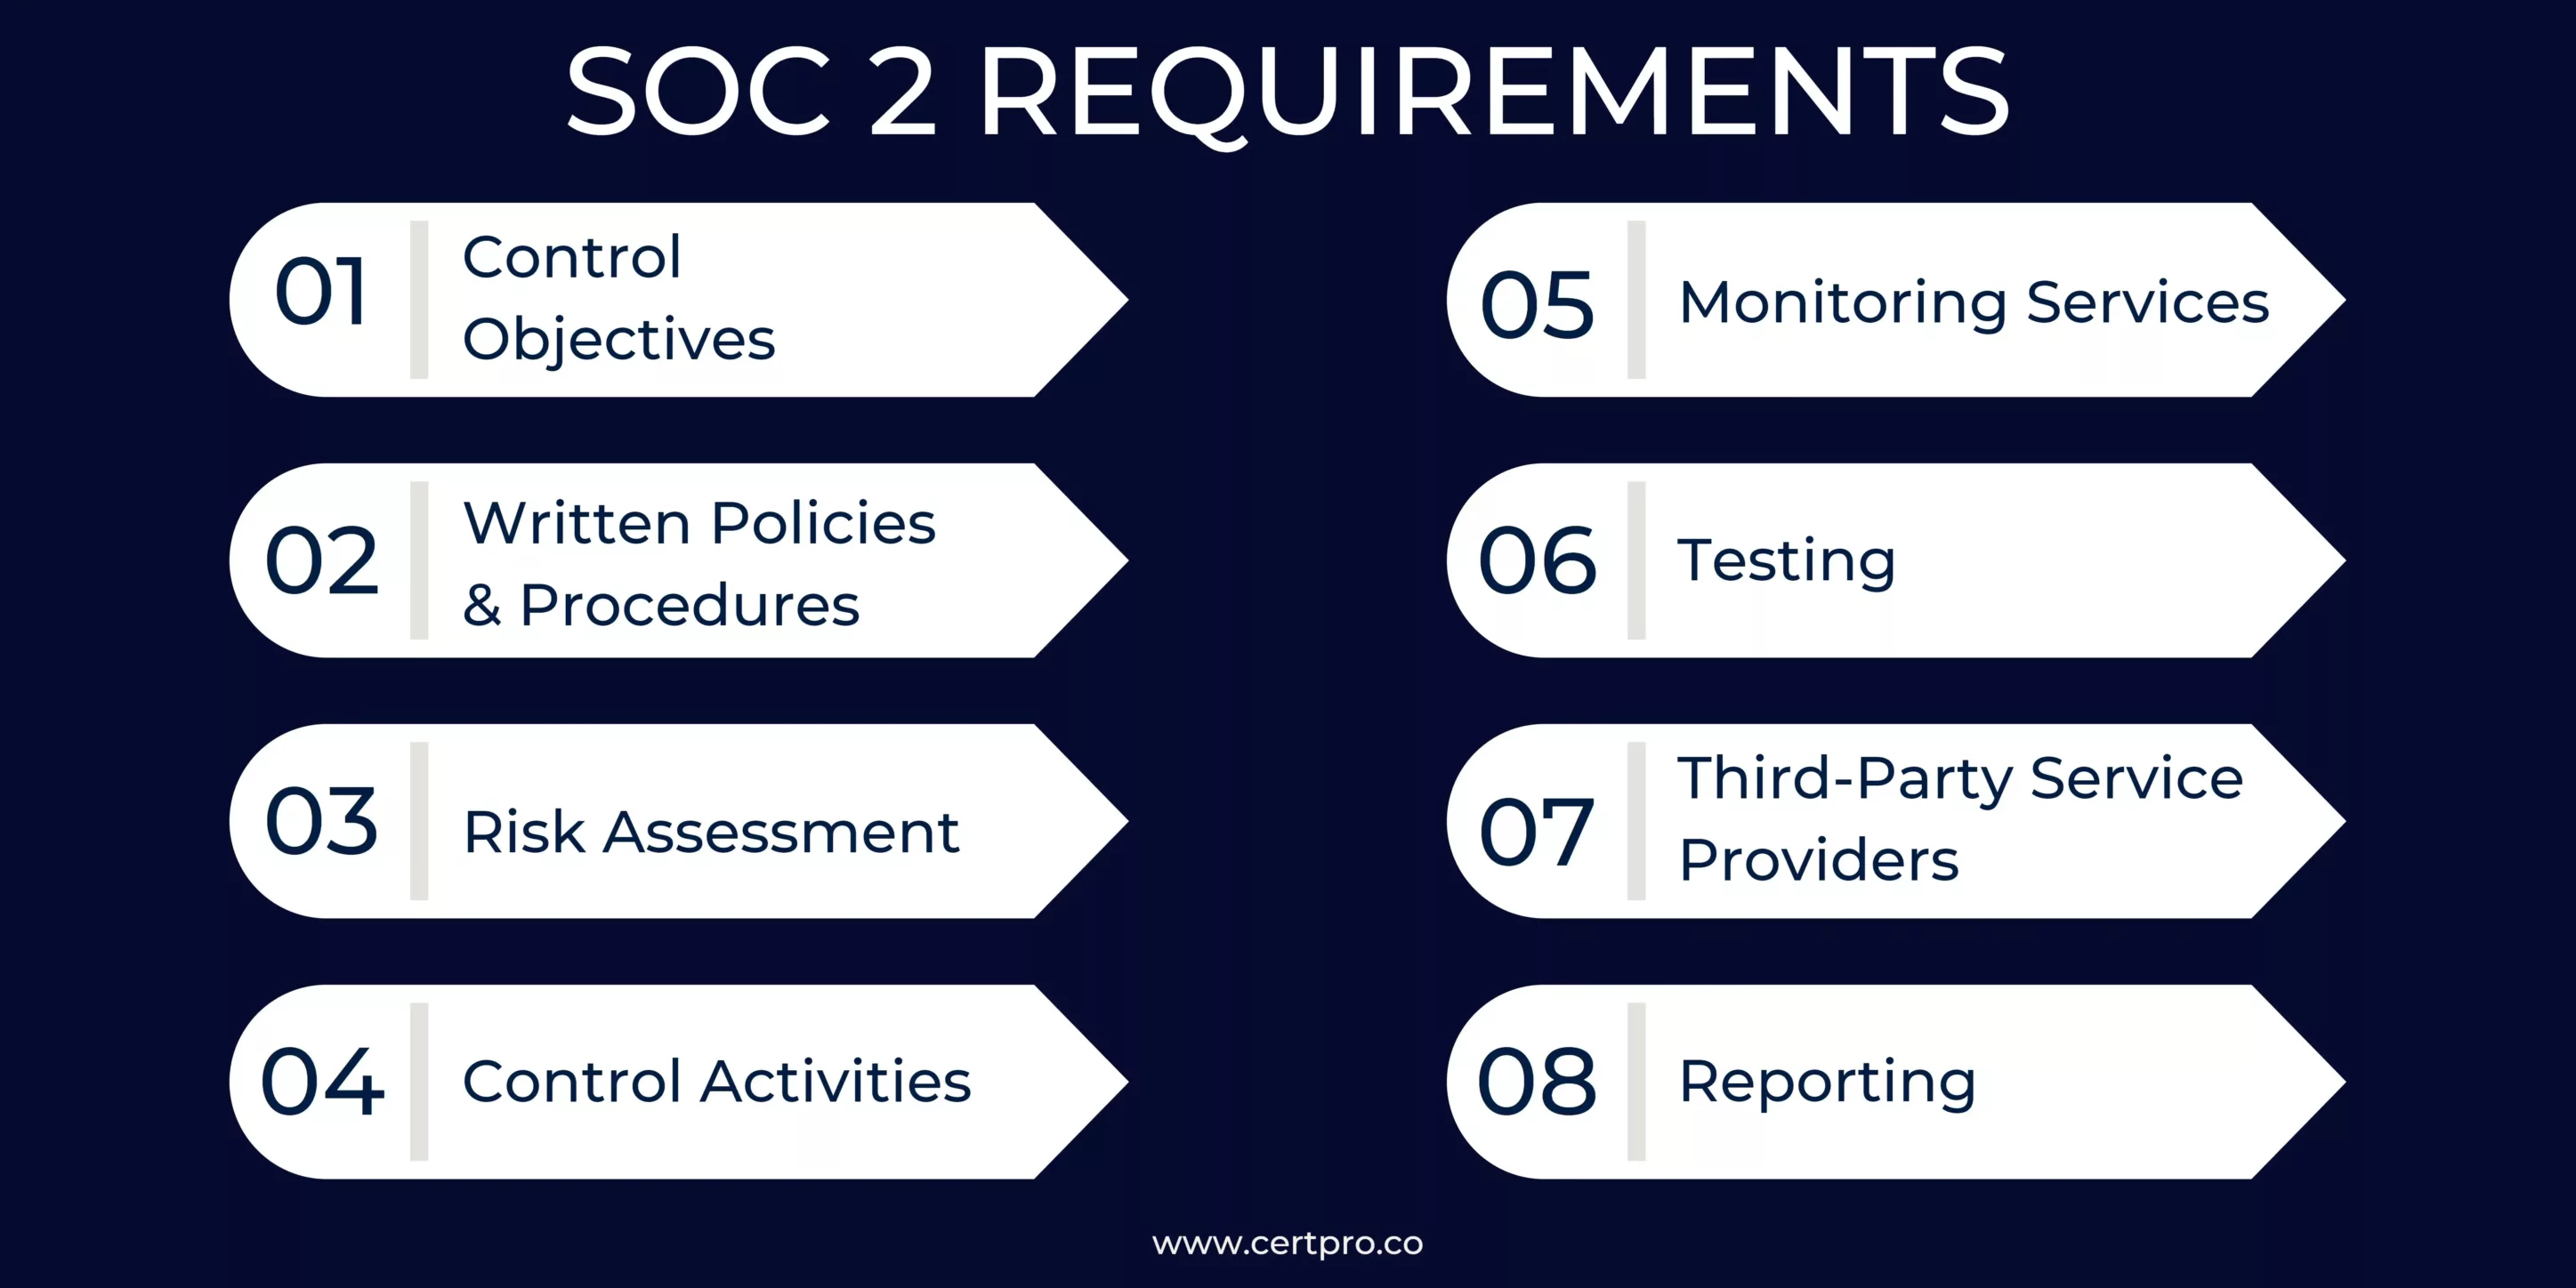 SOC 2 Requirements